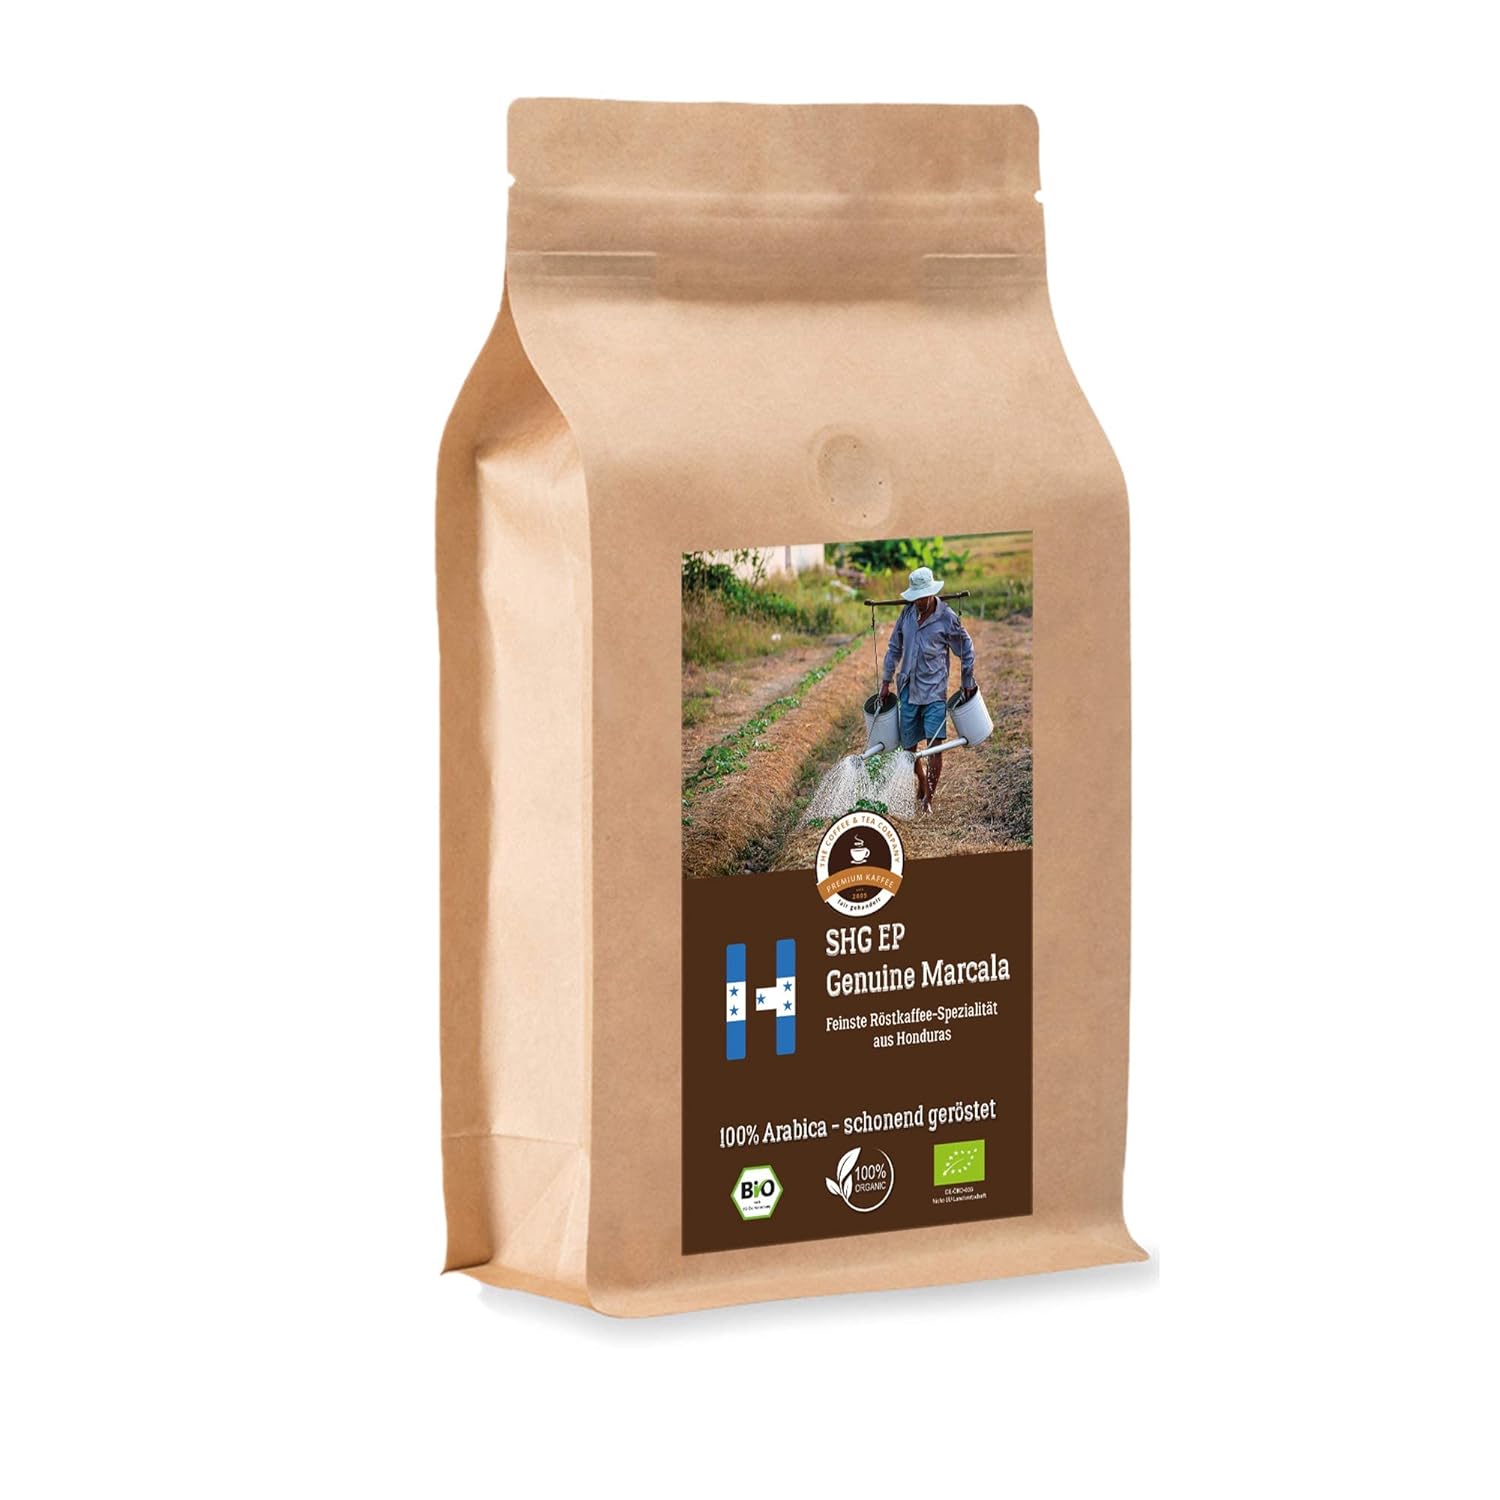 Coffee Globetrotter - Organic Honduras Genuine Marcala - 1000 g Very Fine Ground - for Portafilter Machine, Sieve Machine - Top Coffee - Roasted Coffee from Organic Cultivation